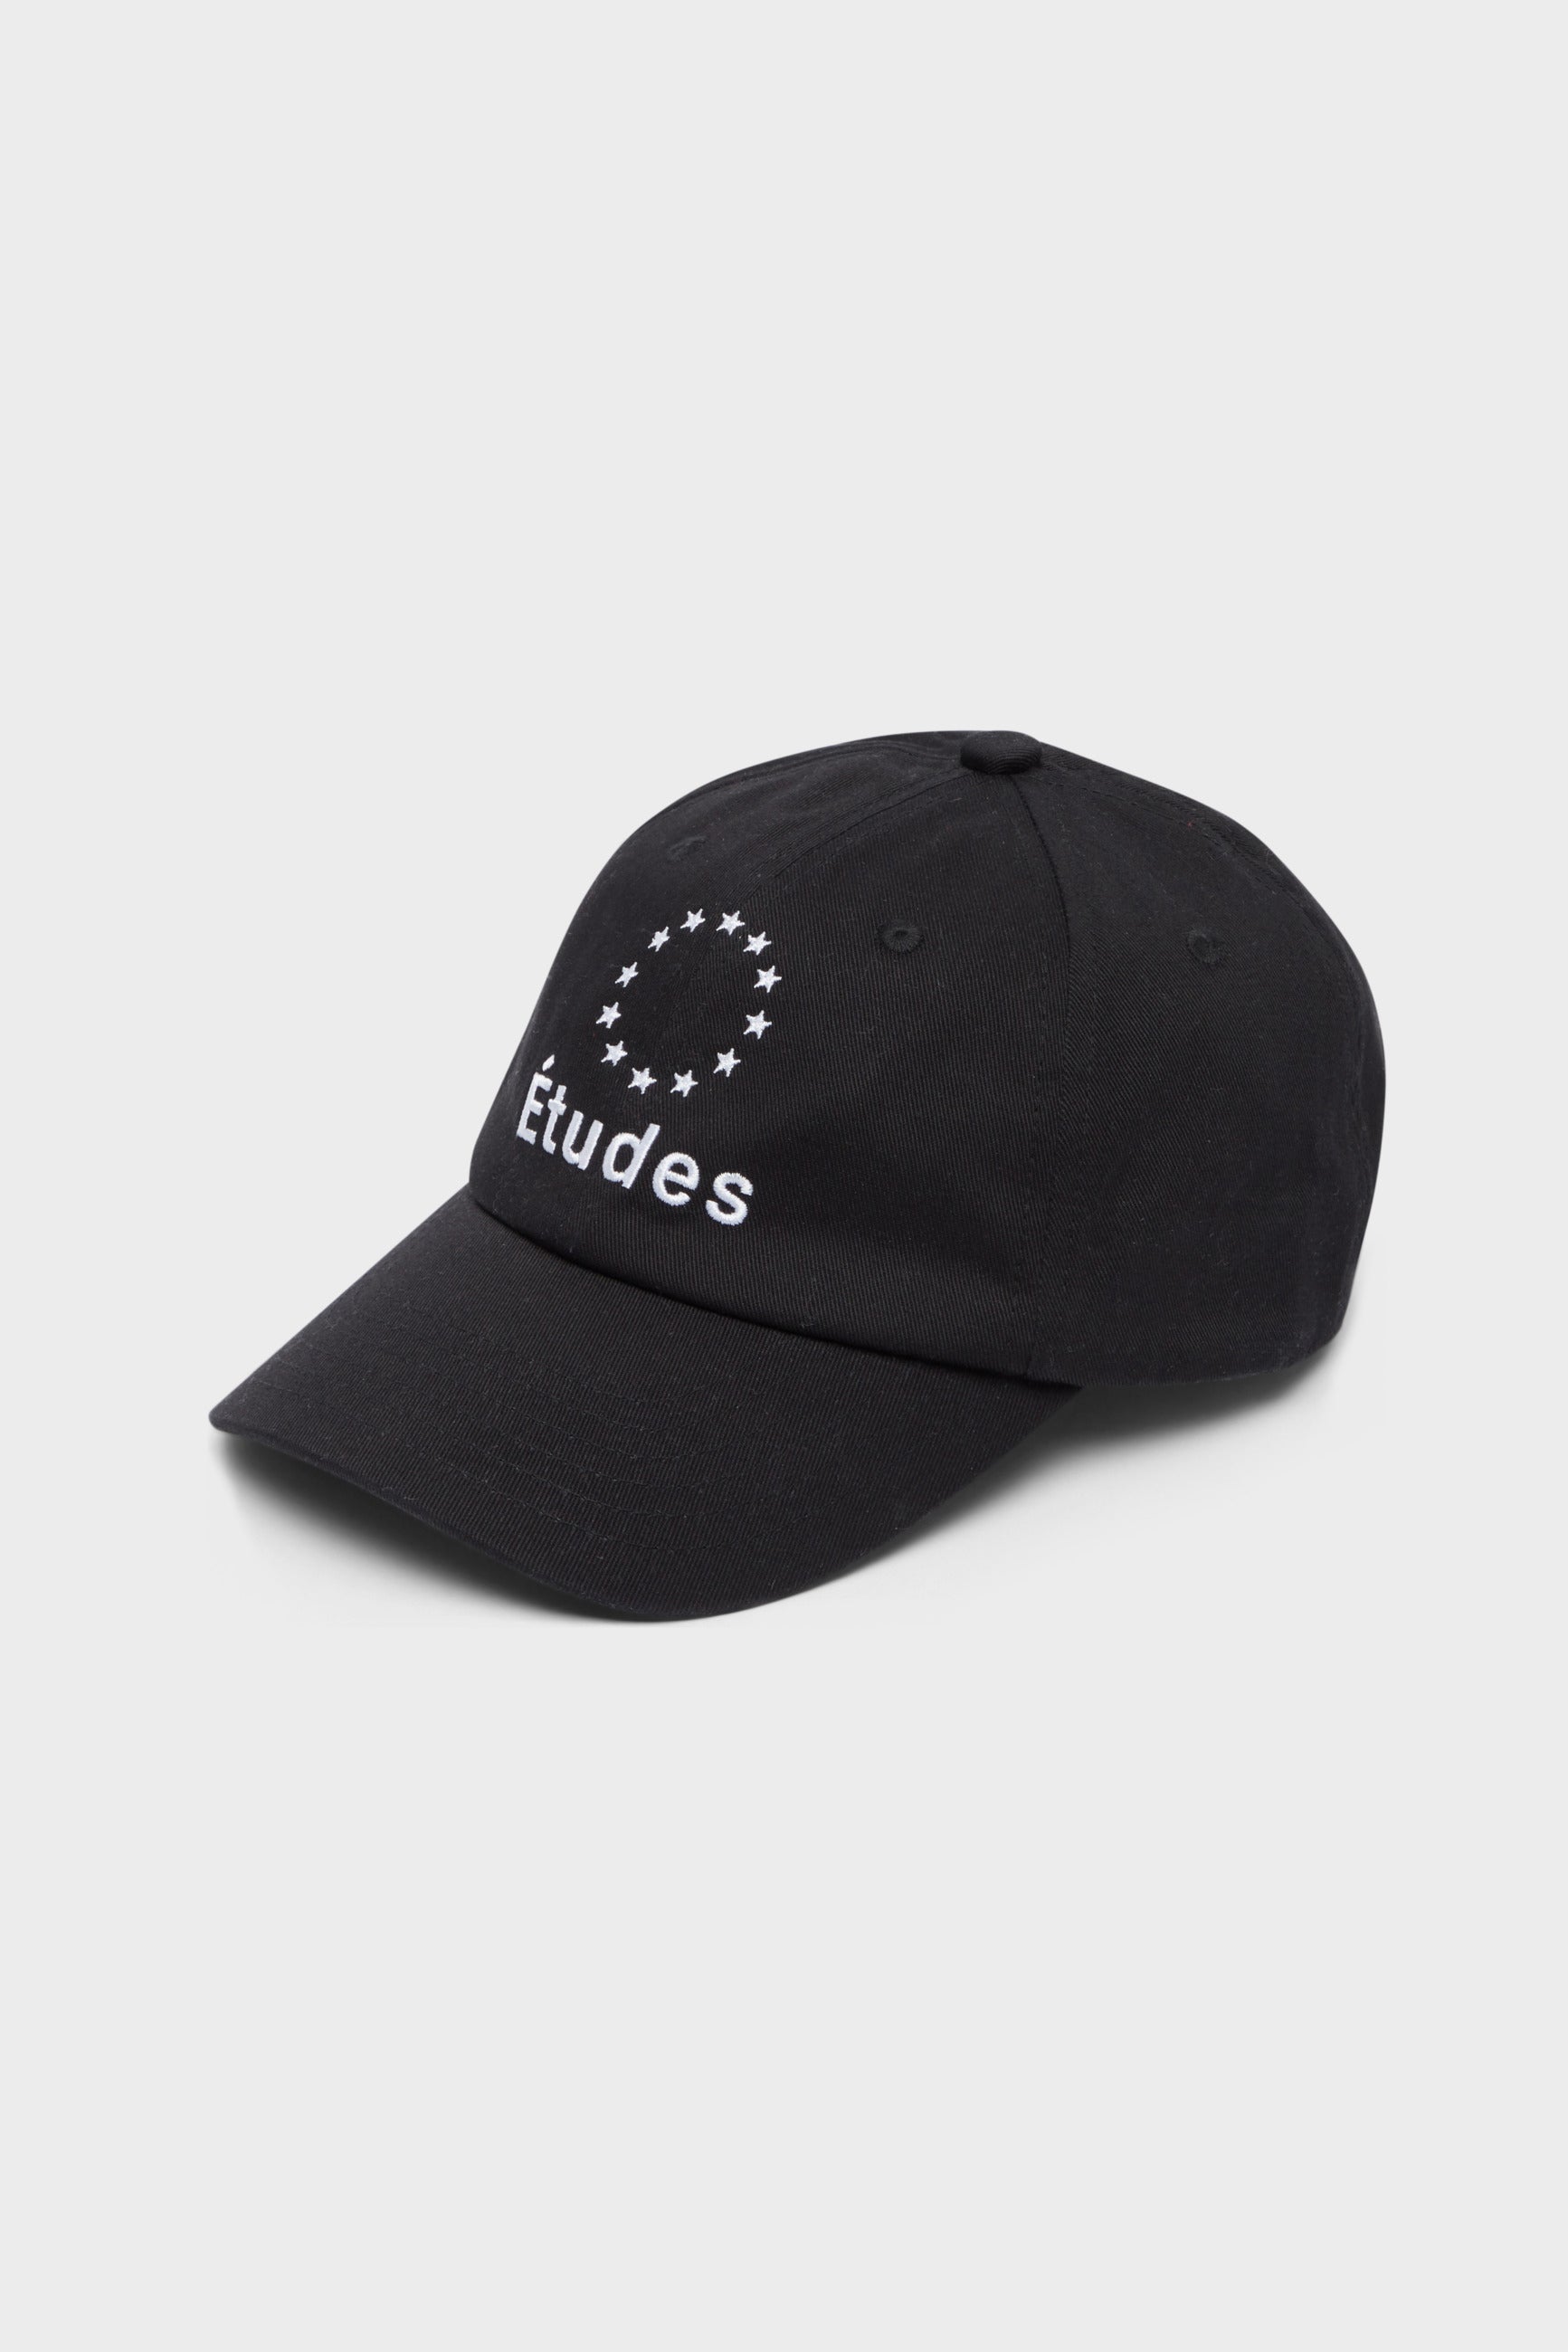 Études Booster Logo Black Hat 1